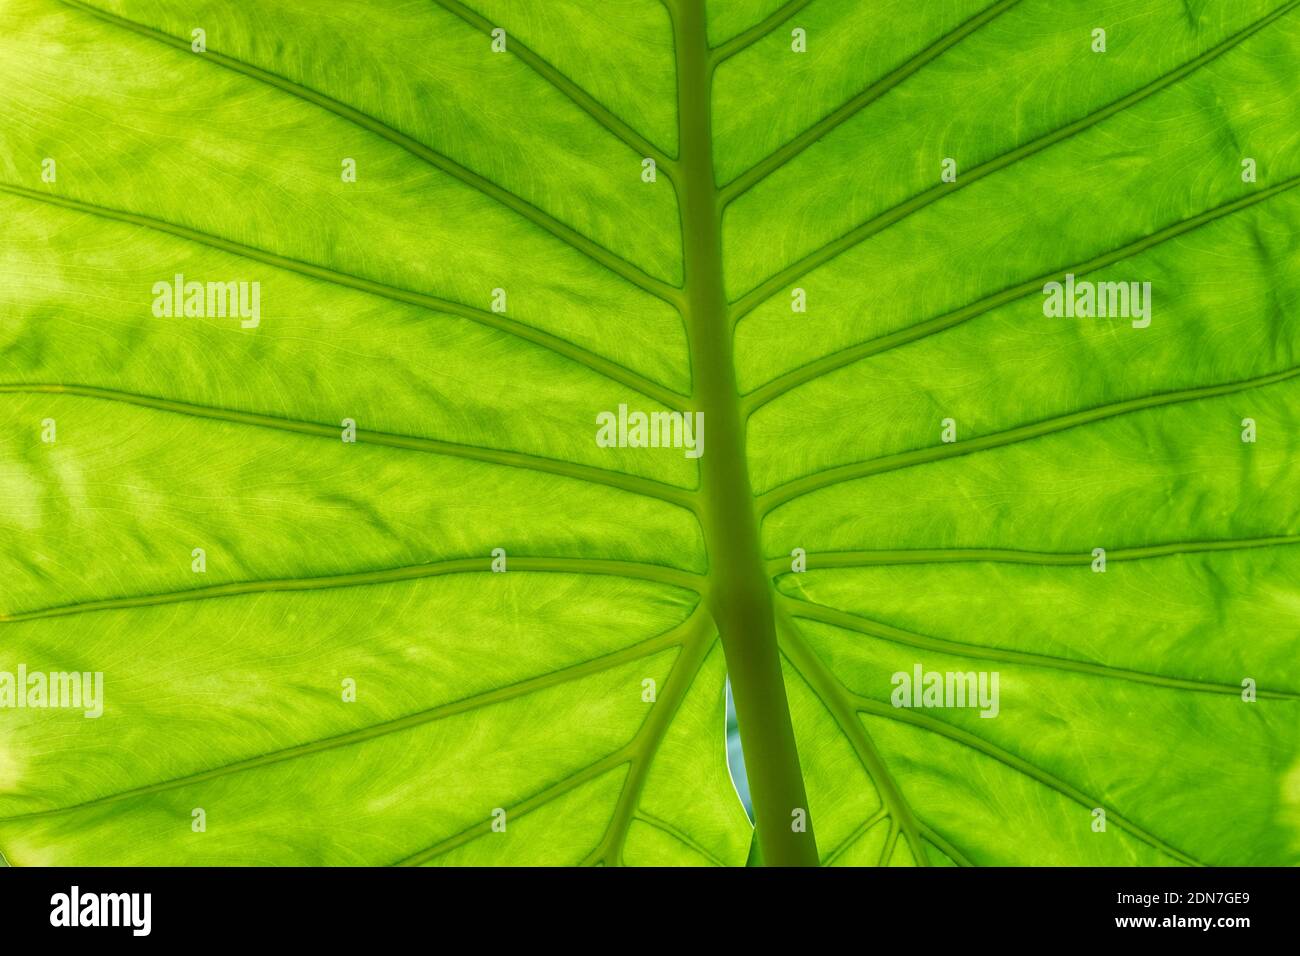 Hinten beleuchtetes grünes Blatt, Nahaufnahme Textur Hintergrund Stockfoto